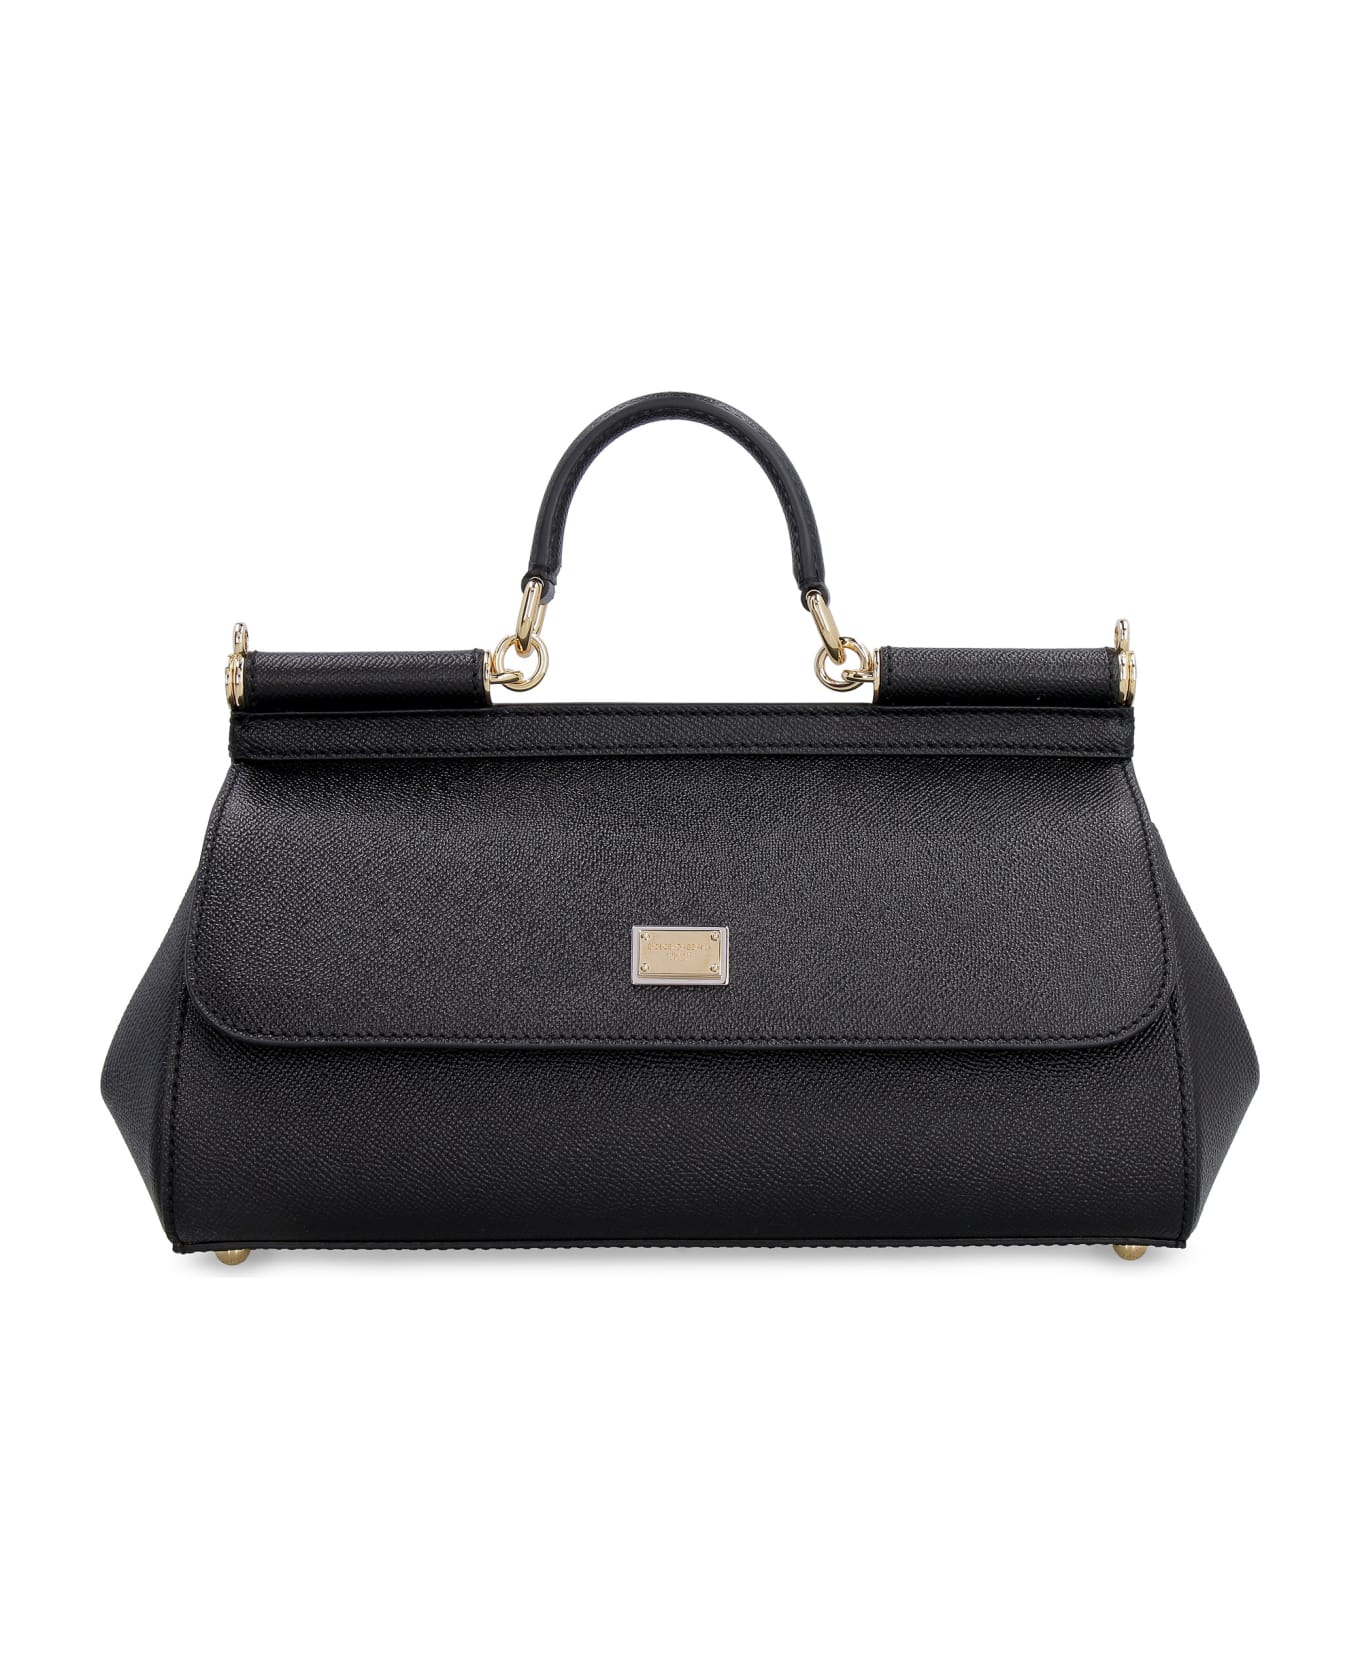 Dolce & Gabbana Sicily Handbag - black